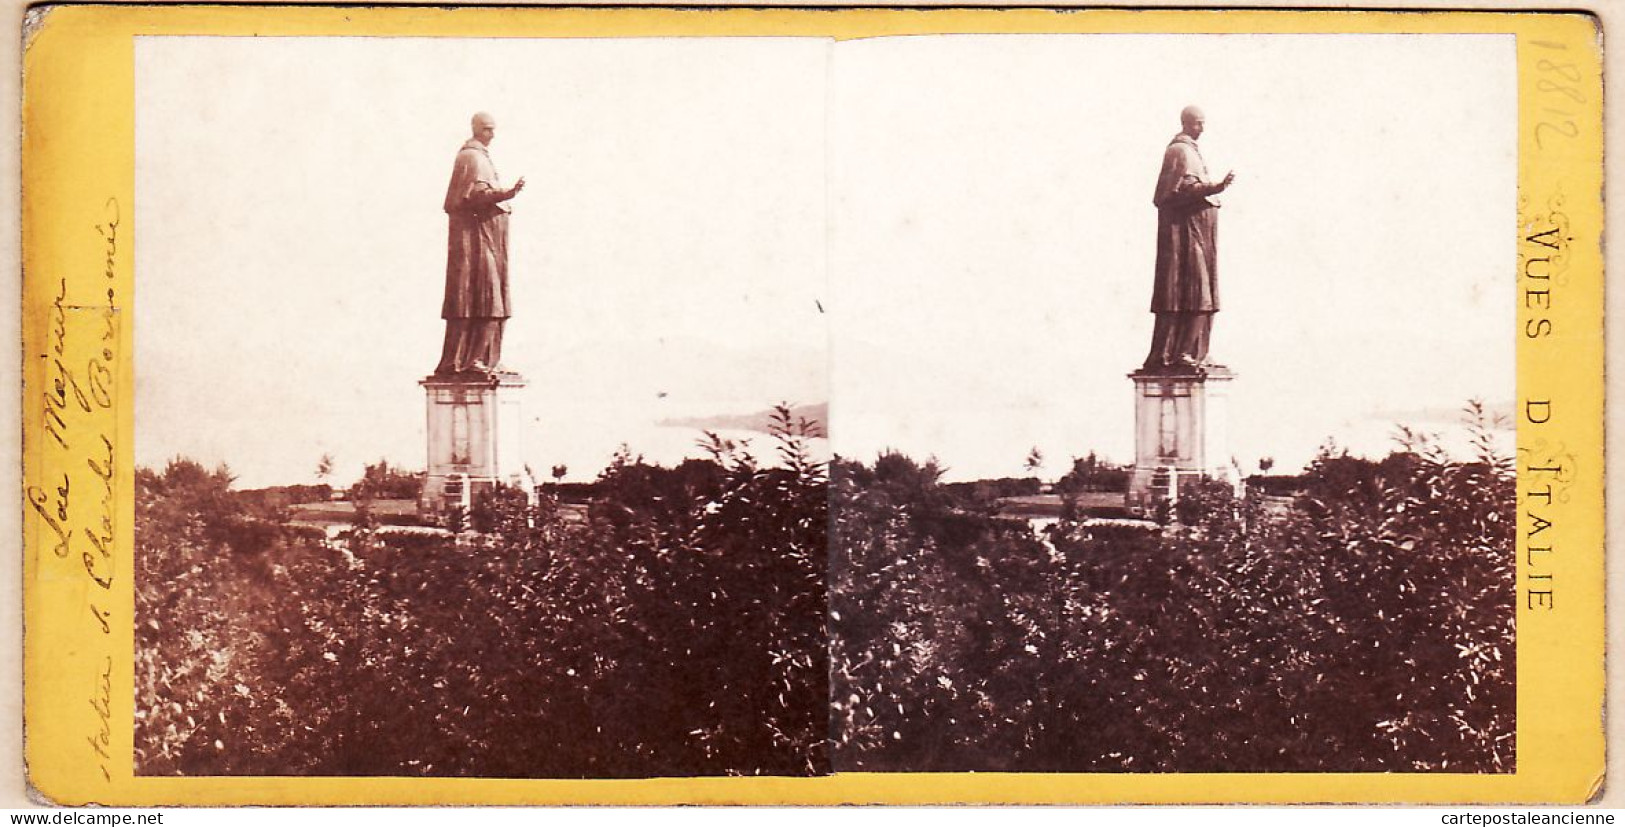 04562 / Fotografia Stereo 1865s Italia StatuaSanto LAC MAJEUR Statue De Saint-Charles-BORROMEE Sancarlone Vues Italie - Photos Stéréoscopiques